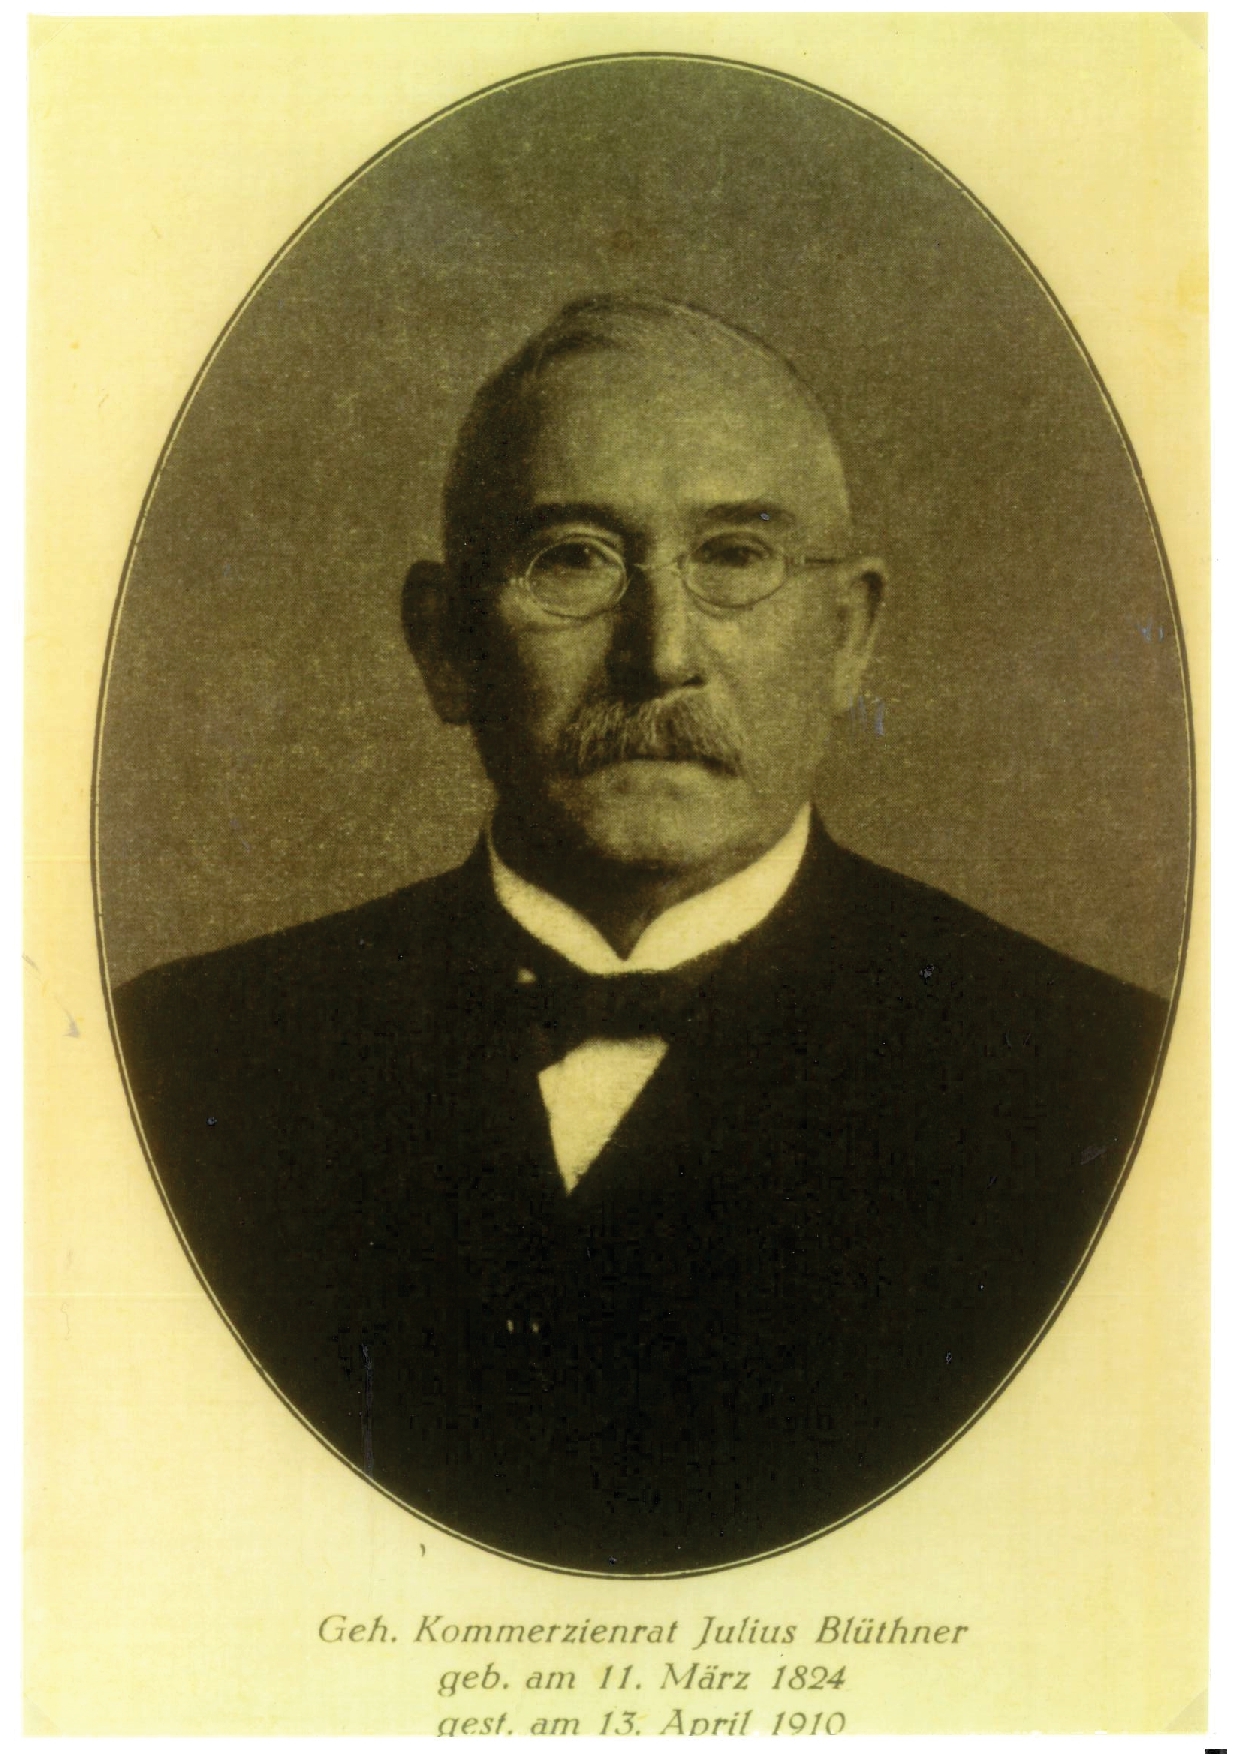 Julius Blüthner